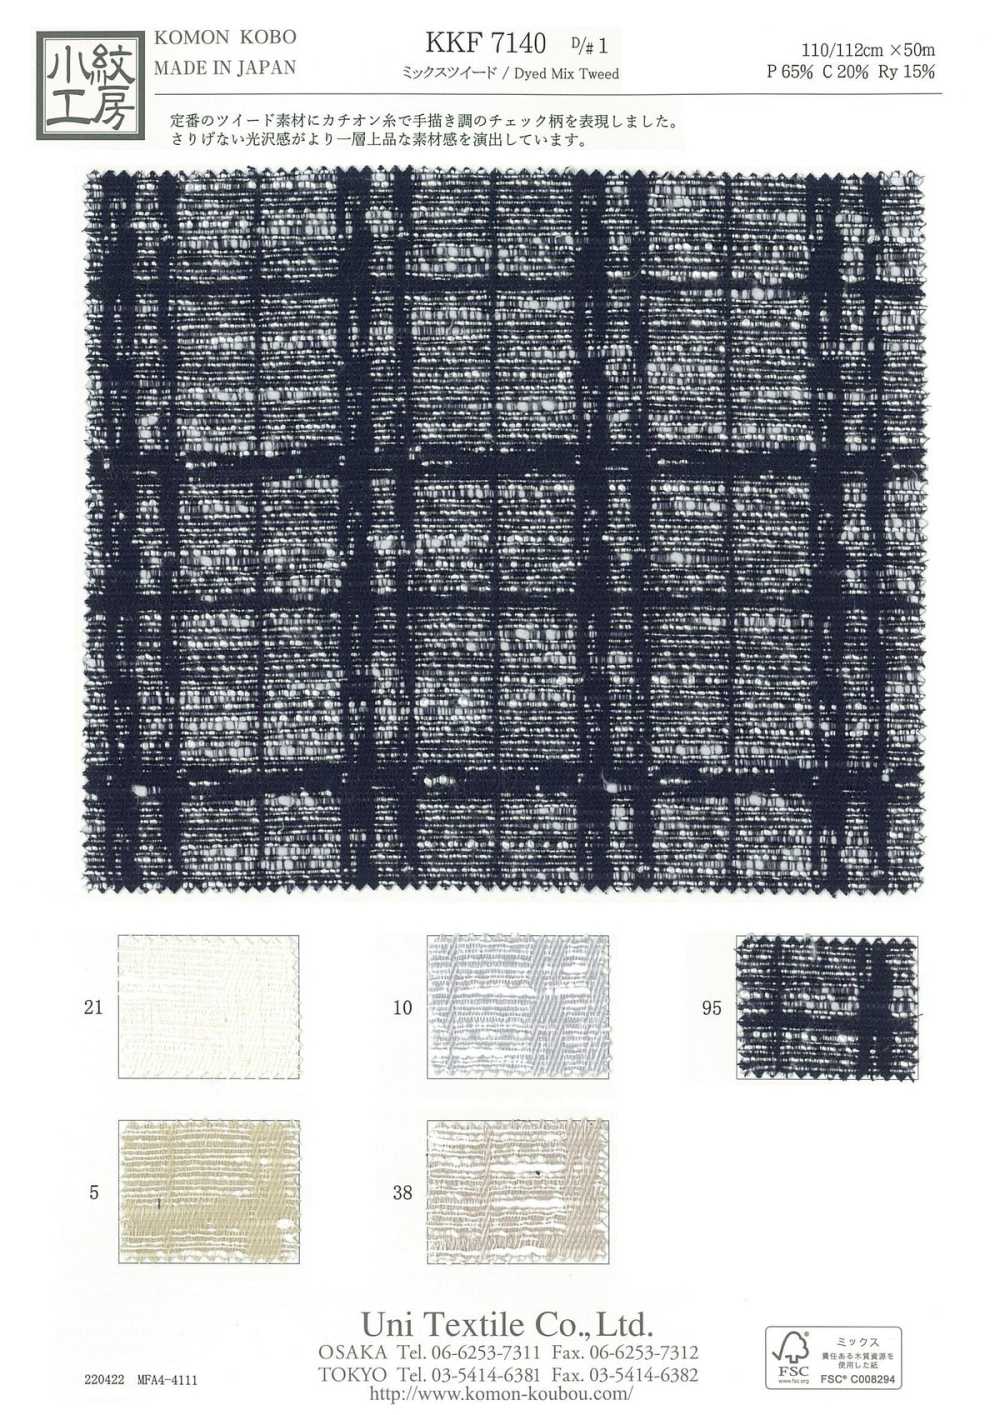 KKF7140-D-1 Tweed Mixto[Fabrica Textil] Uni Textile